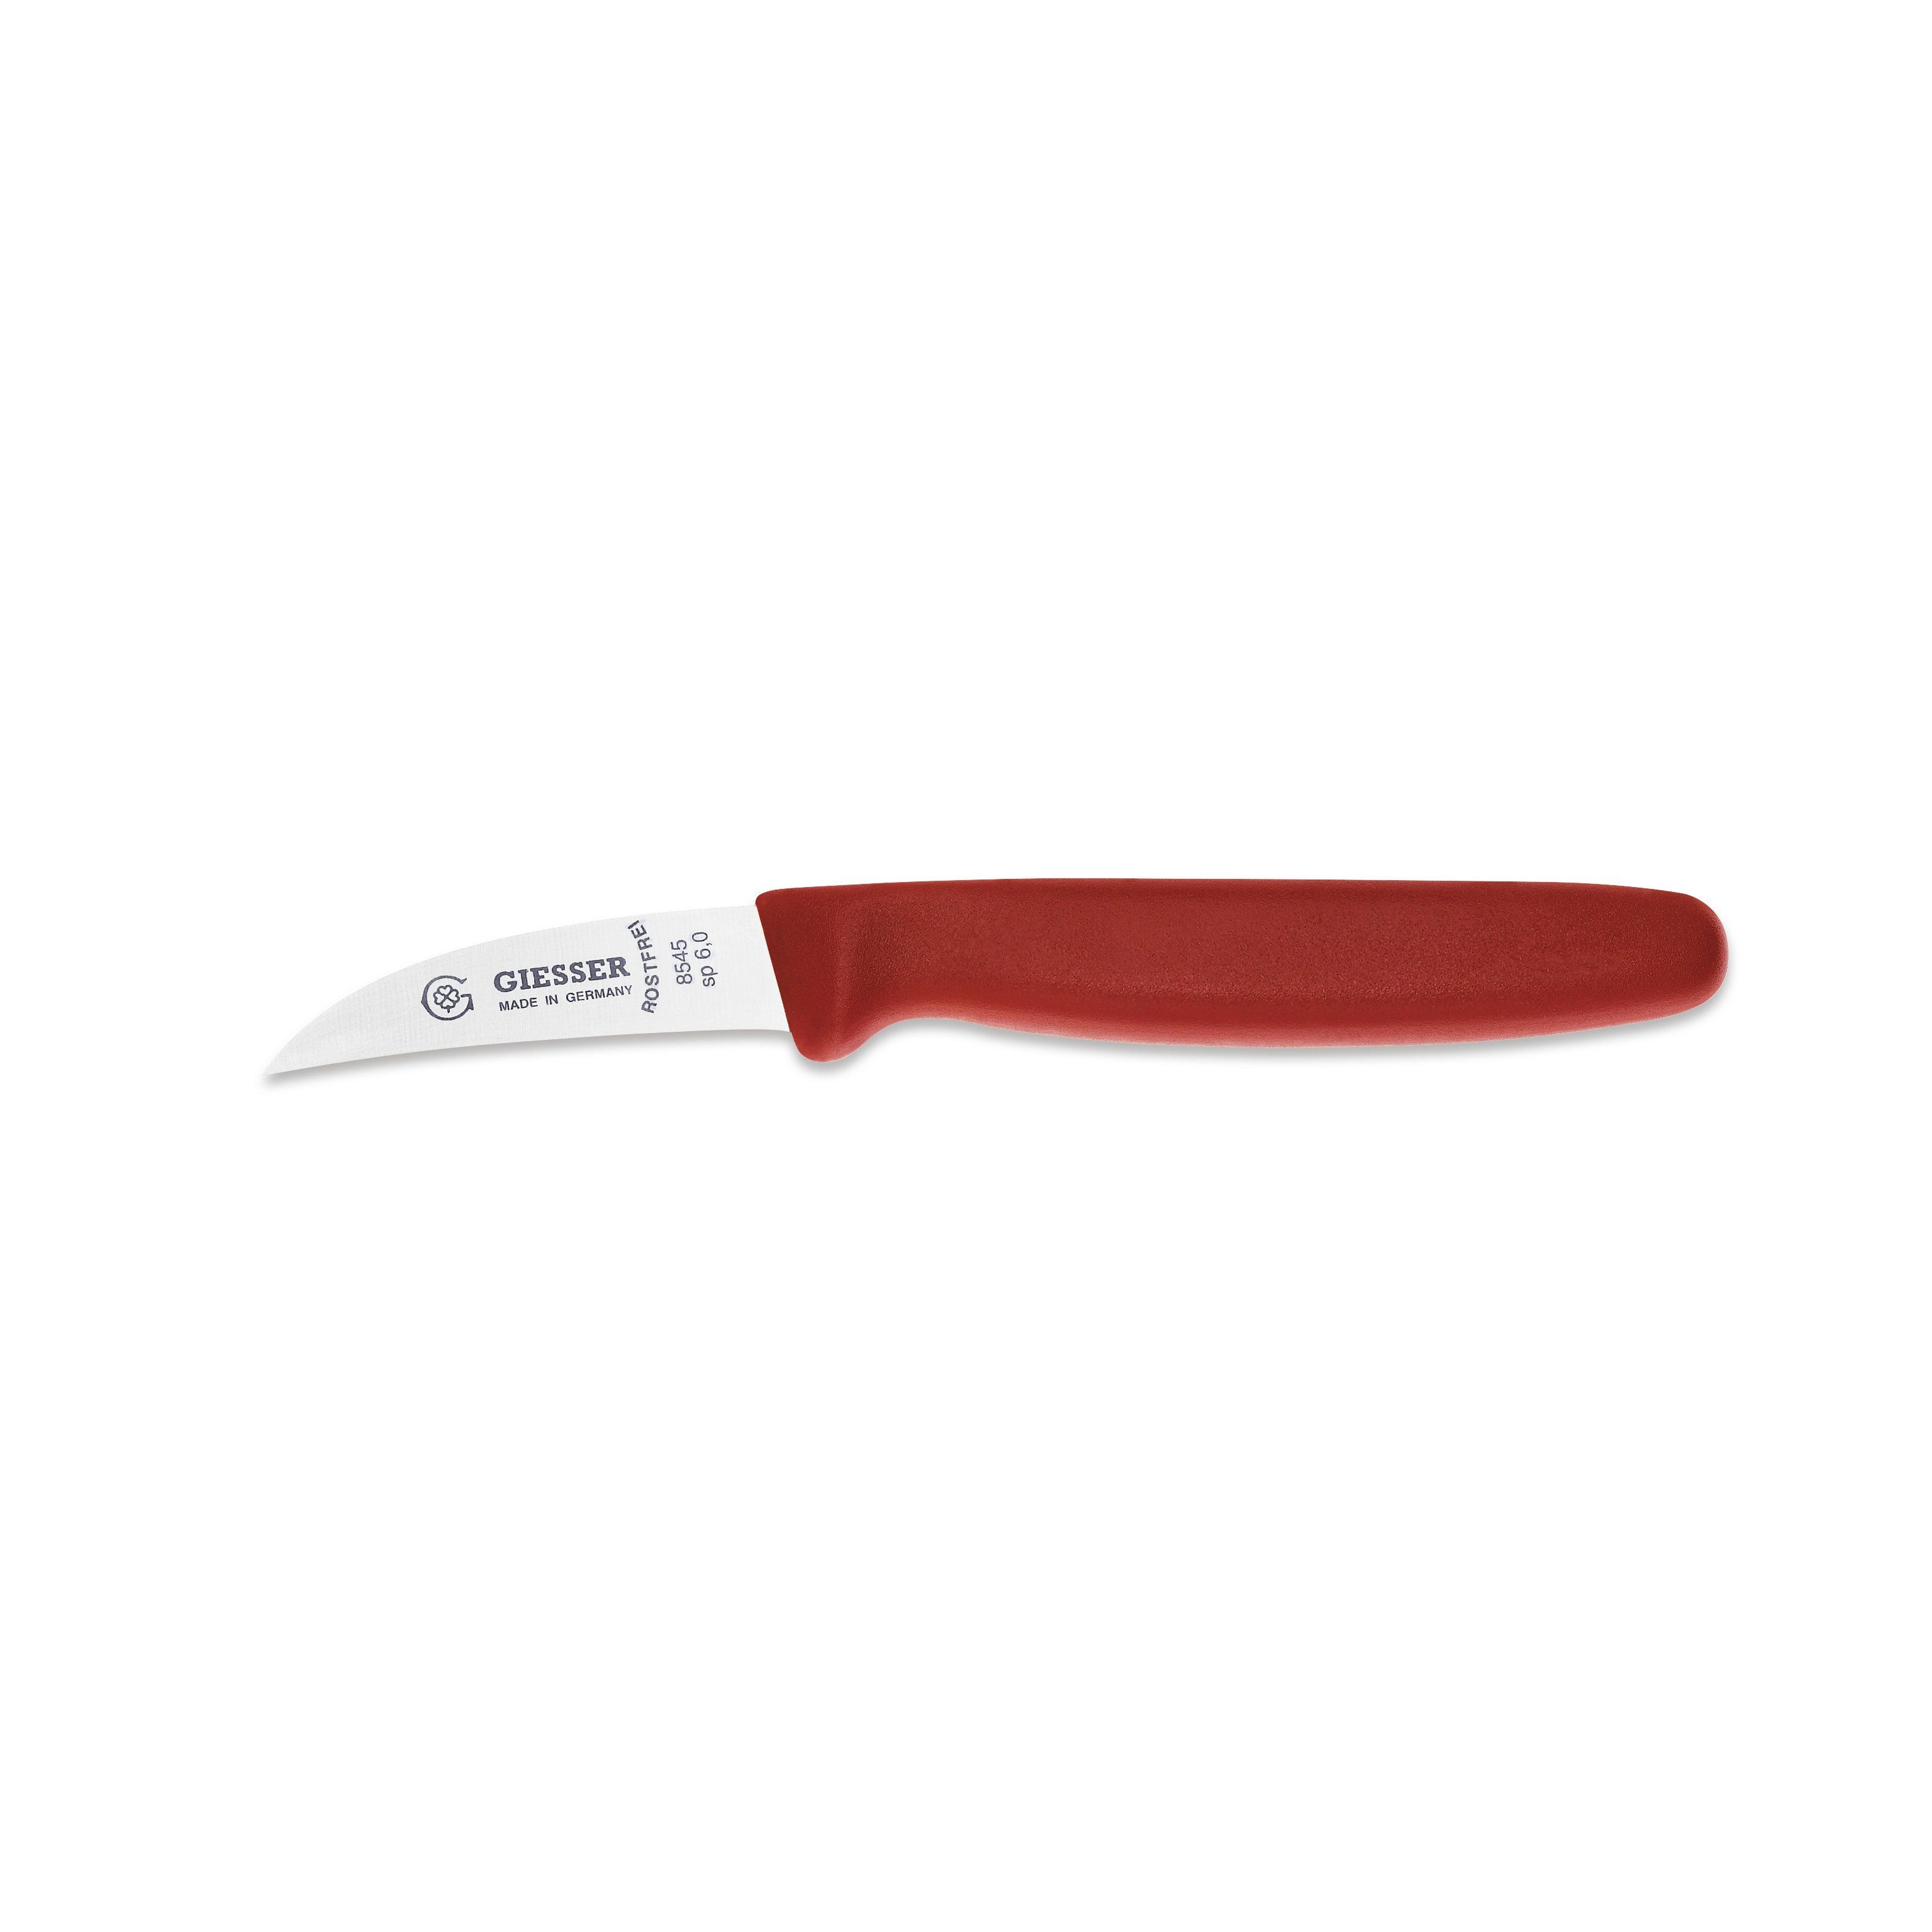 Giesser Messer Schälmesser Gemüsemesser 8545 sp 6, Handabzug, Klinge 6 cm Hohle-Schneide rot